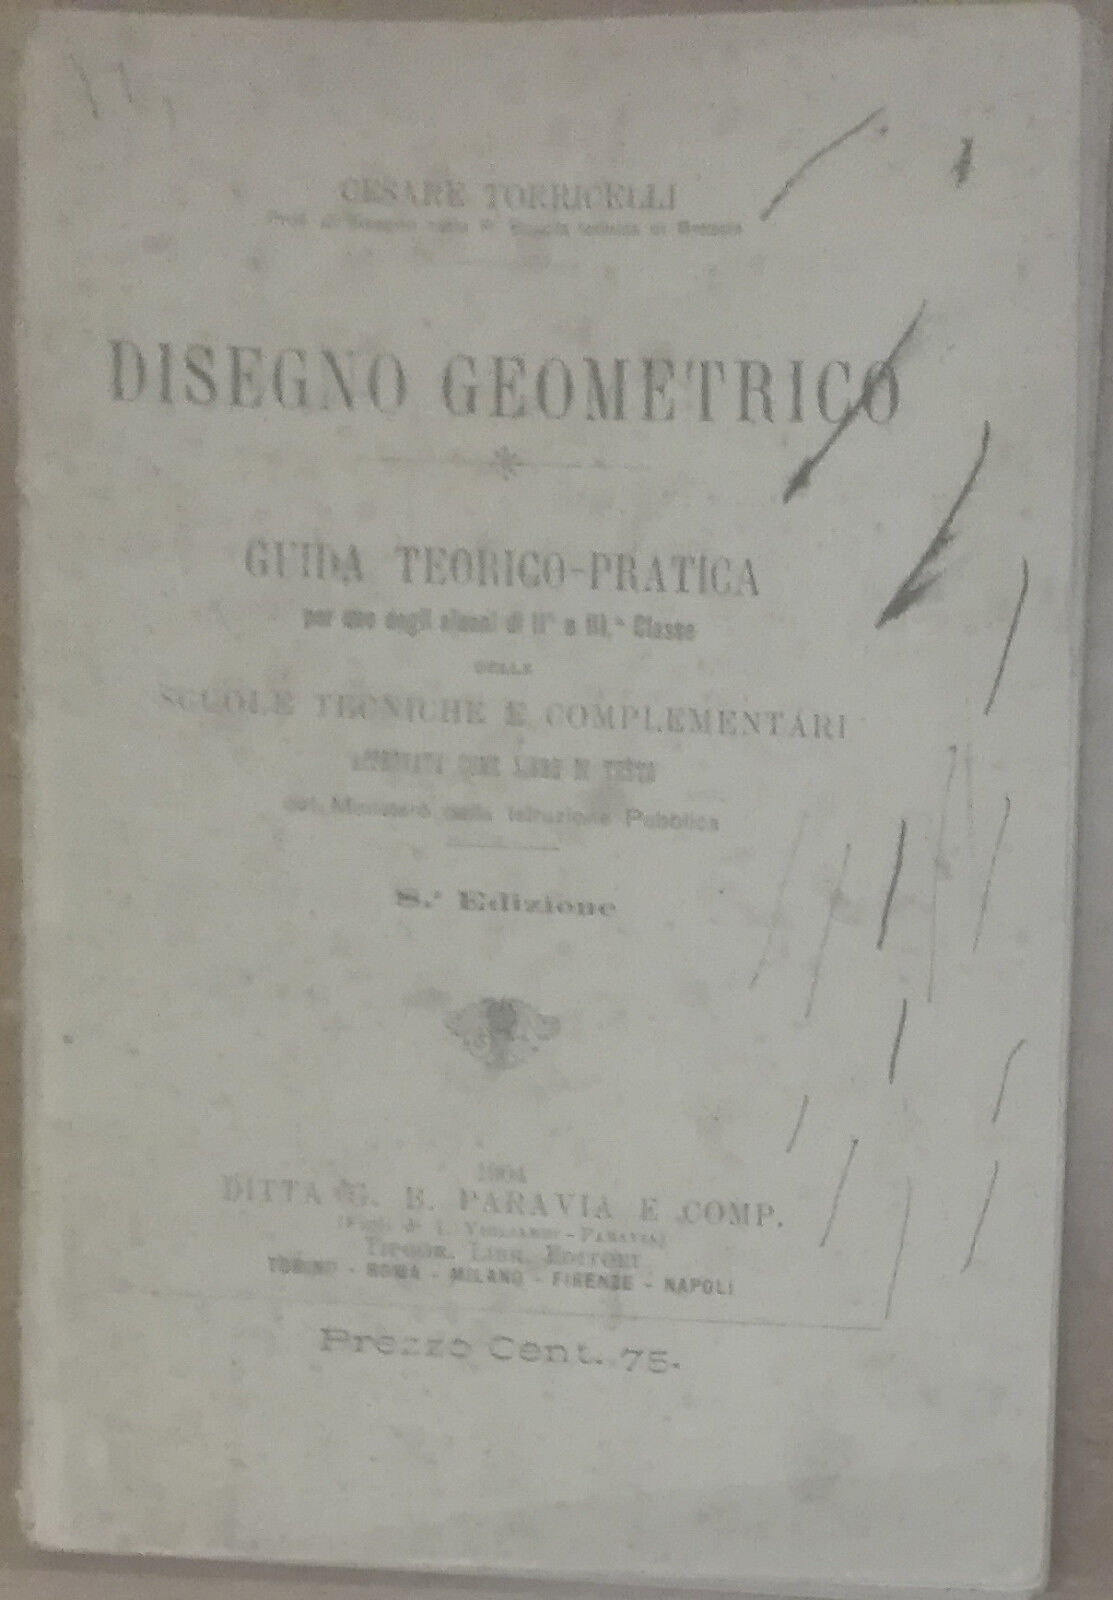 Disegno Geometrico - Torricelli - Ditta G. B. Paravia e Comp.,1904 - A